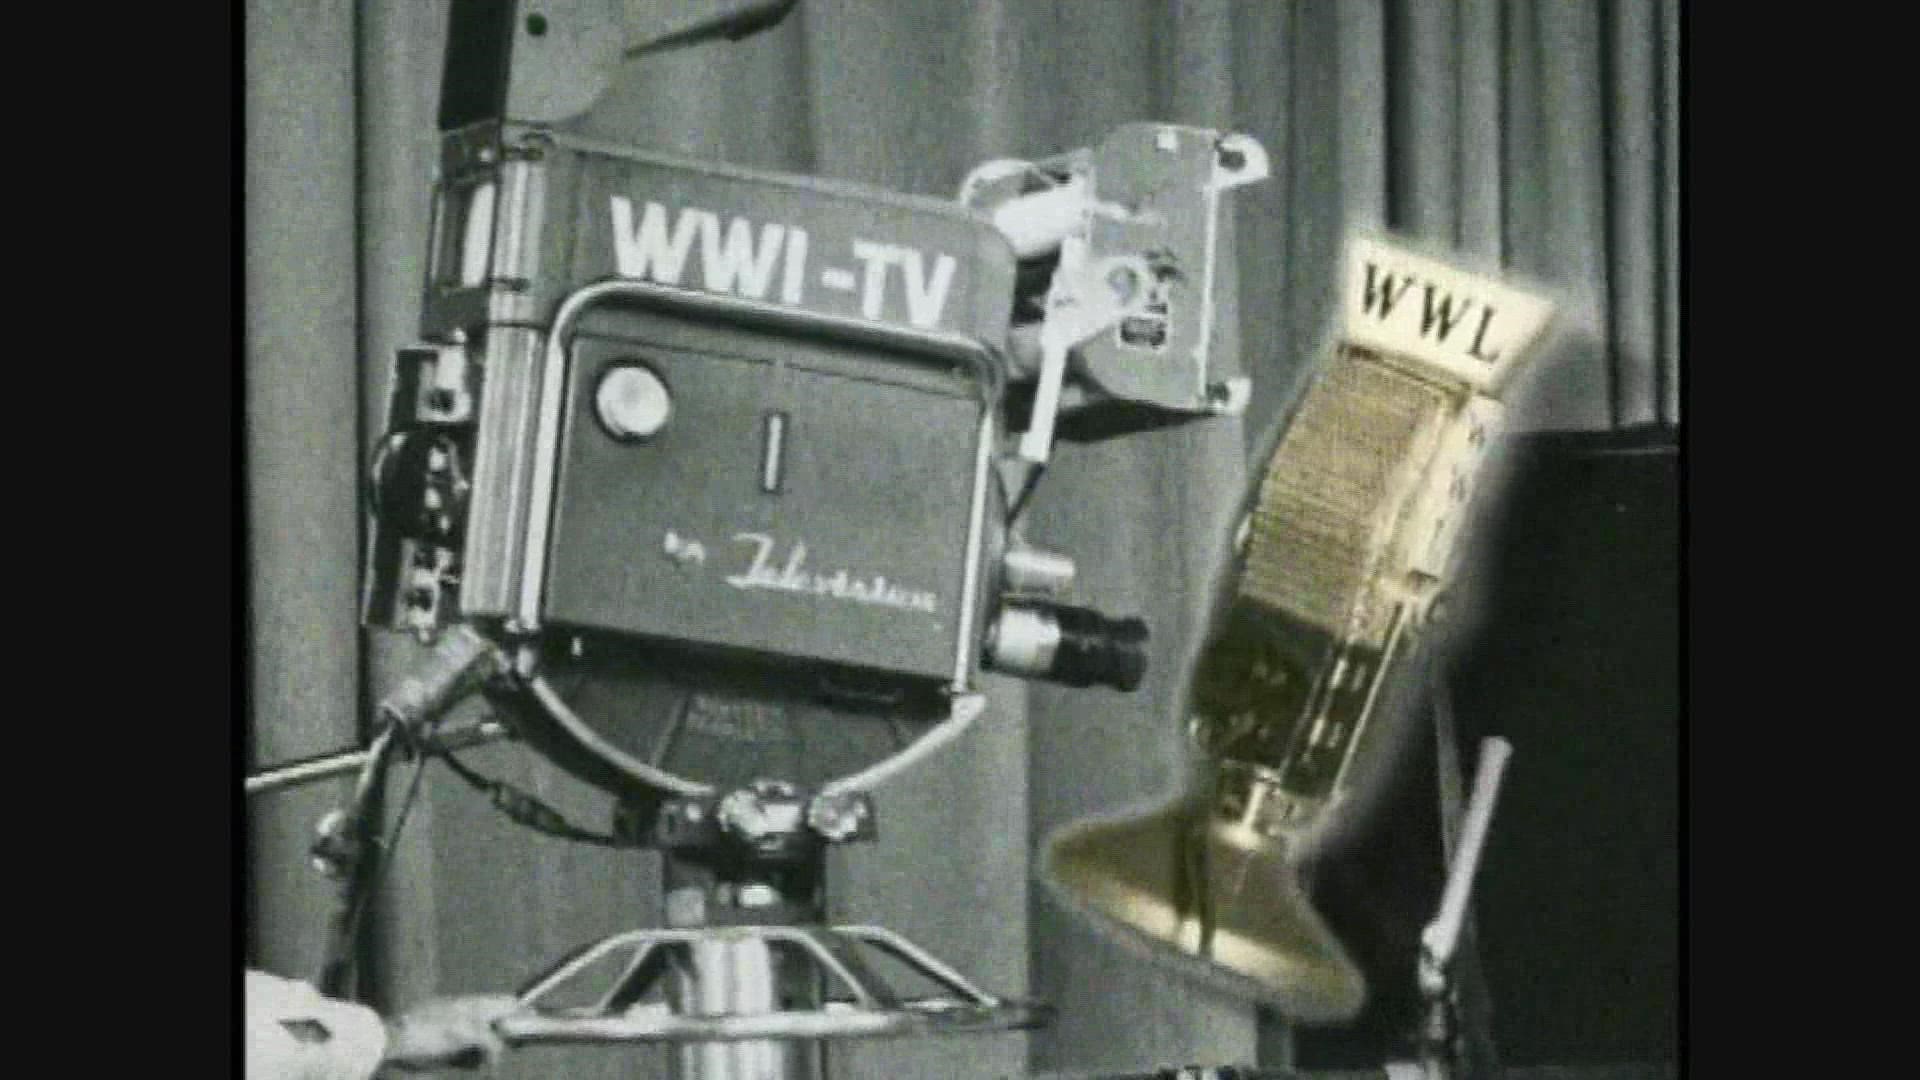 WWL-TV celebrates its 65th anniversary.